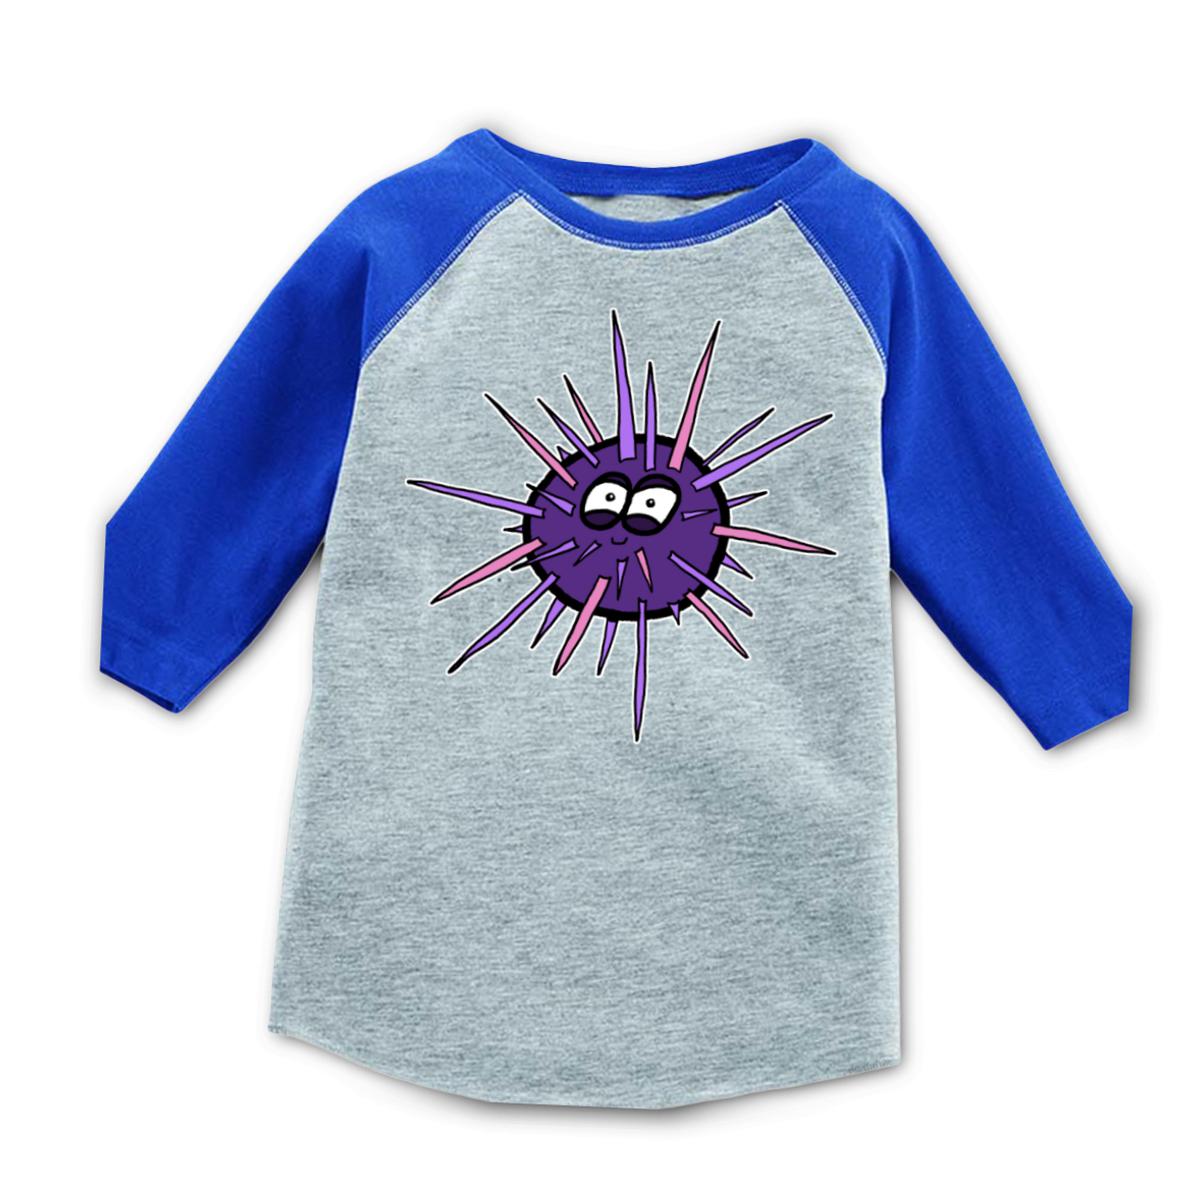 Sea Urchin Toddler Raglan Tee 2T heather-royal